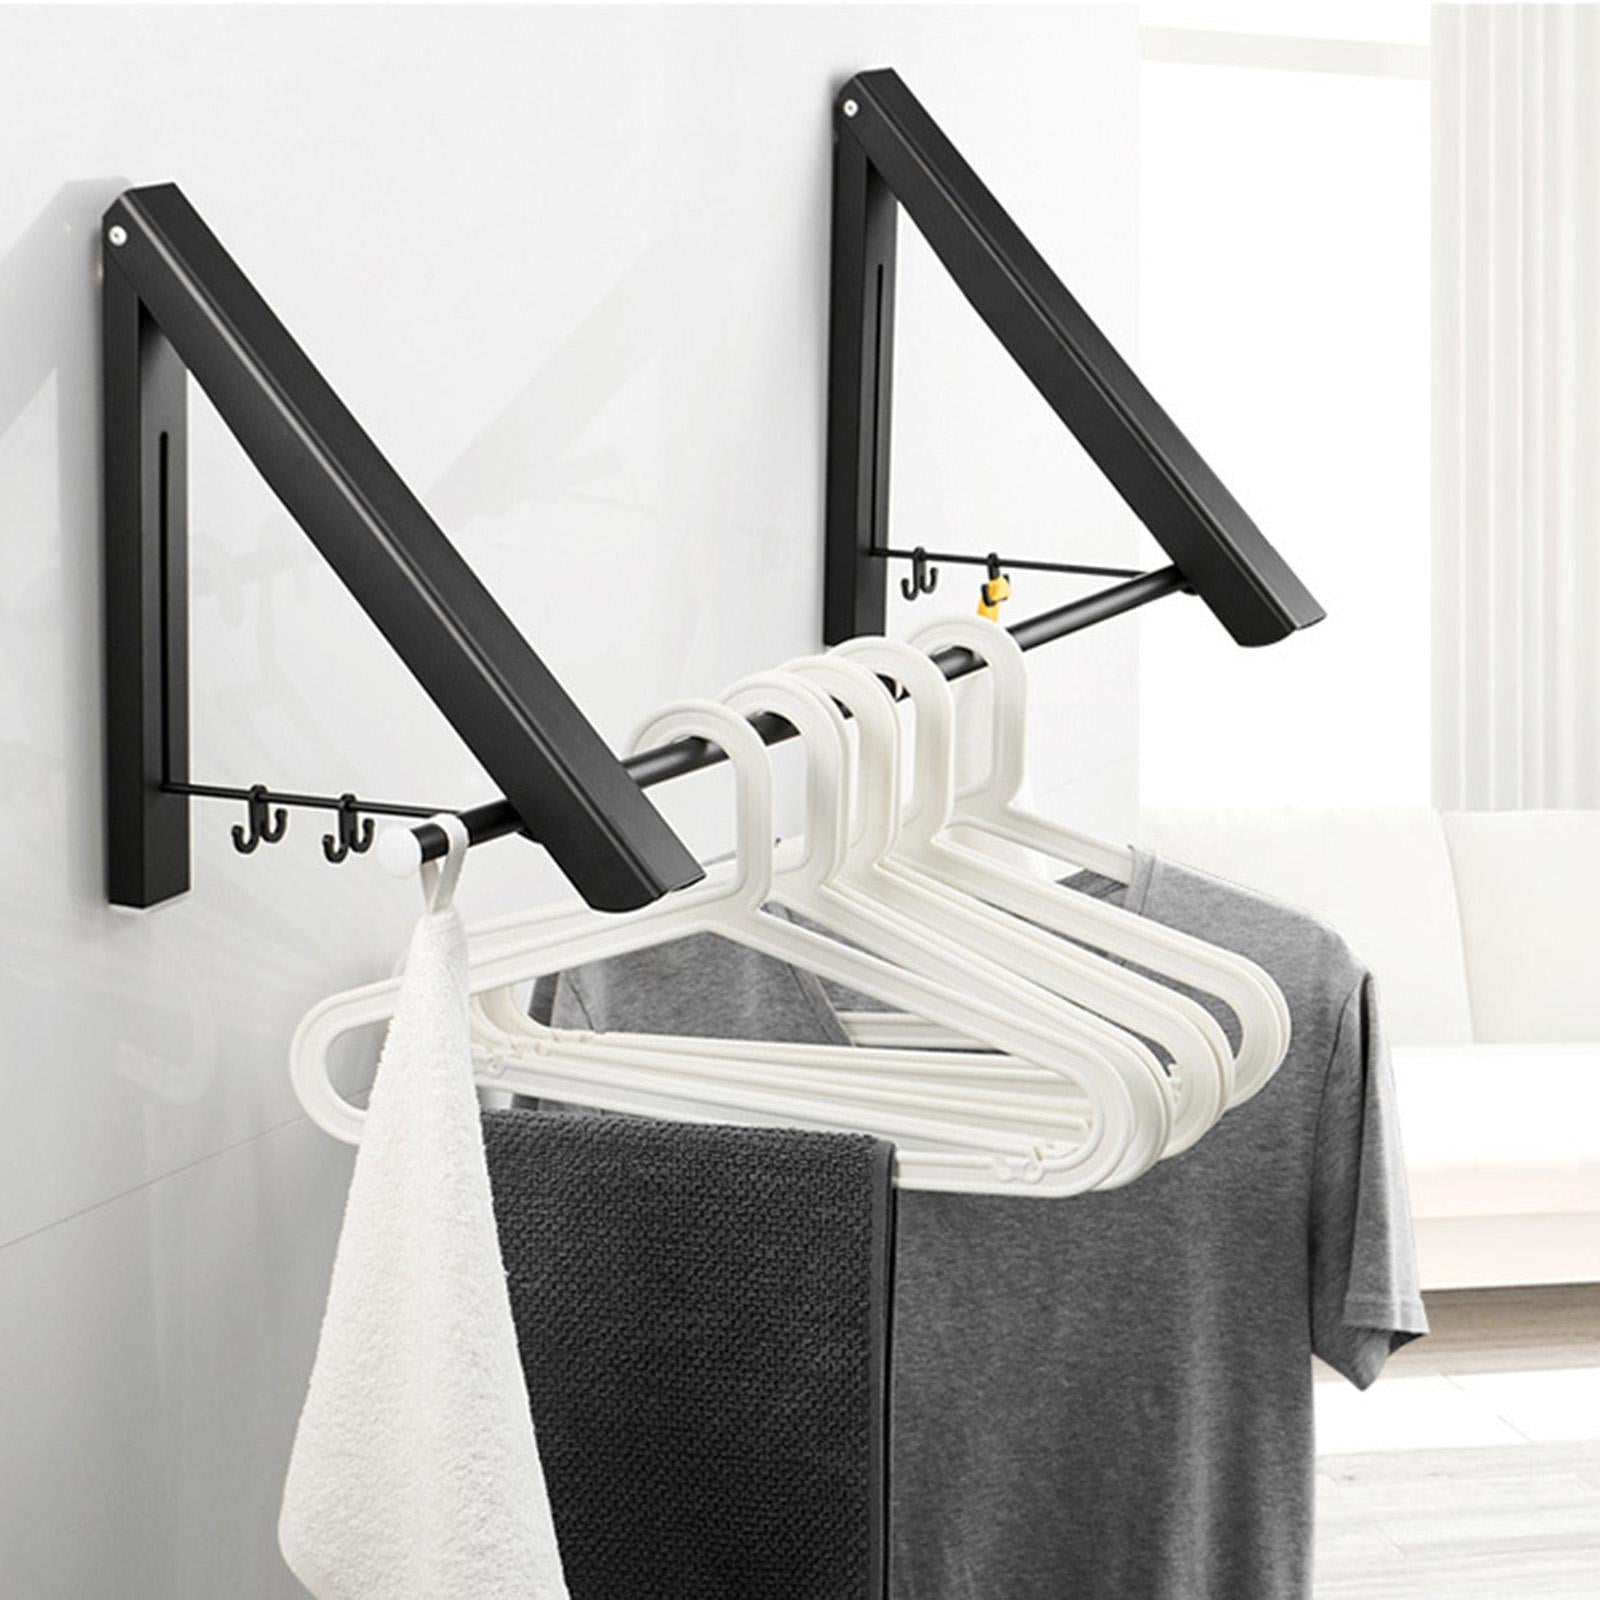 Aluminum Folding Clothes Hanger Wall Mounted Retractable Clothes Rack Black